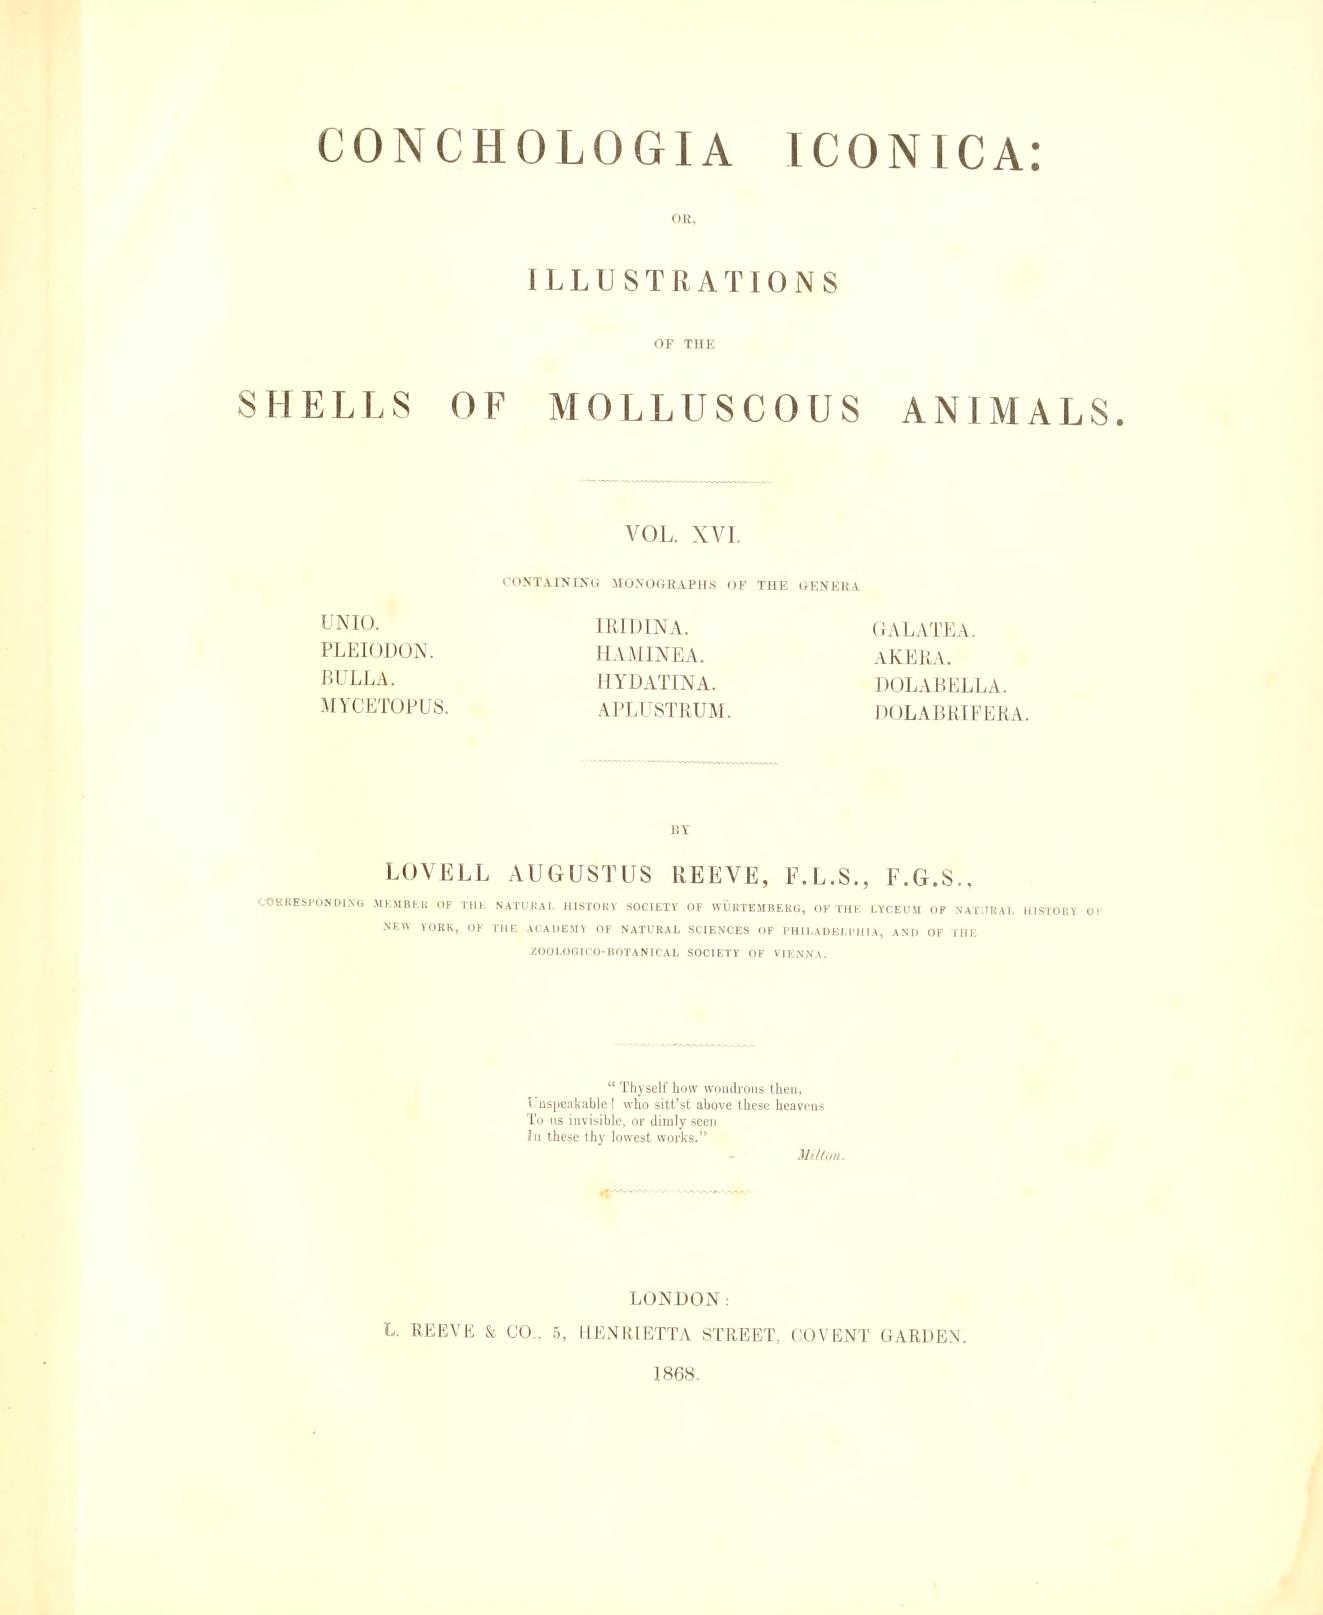 Media type: text; Reeve 1864 Description: Conchologia iconica, vol. XVI;